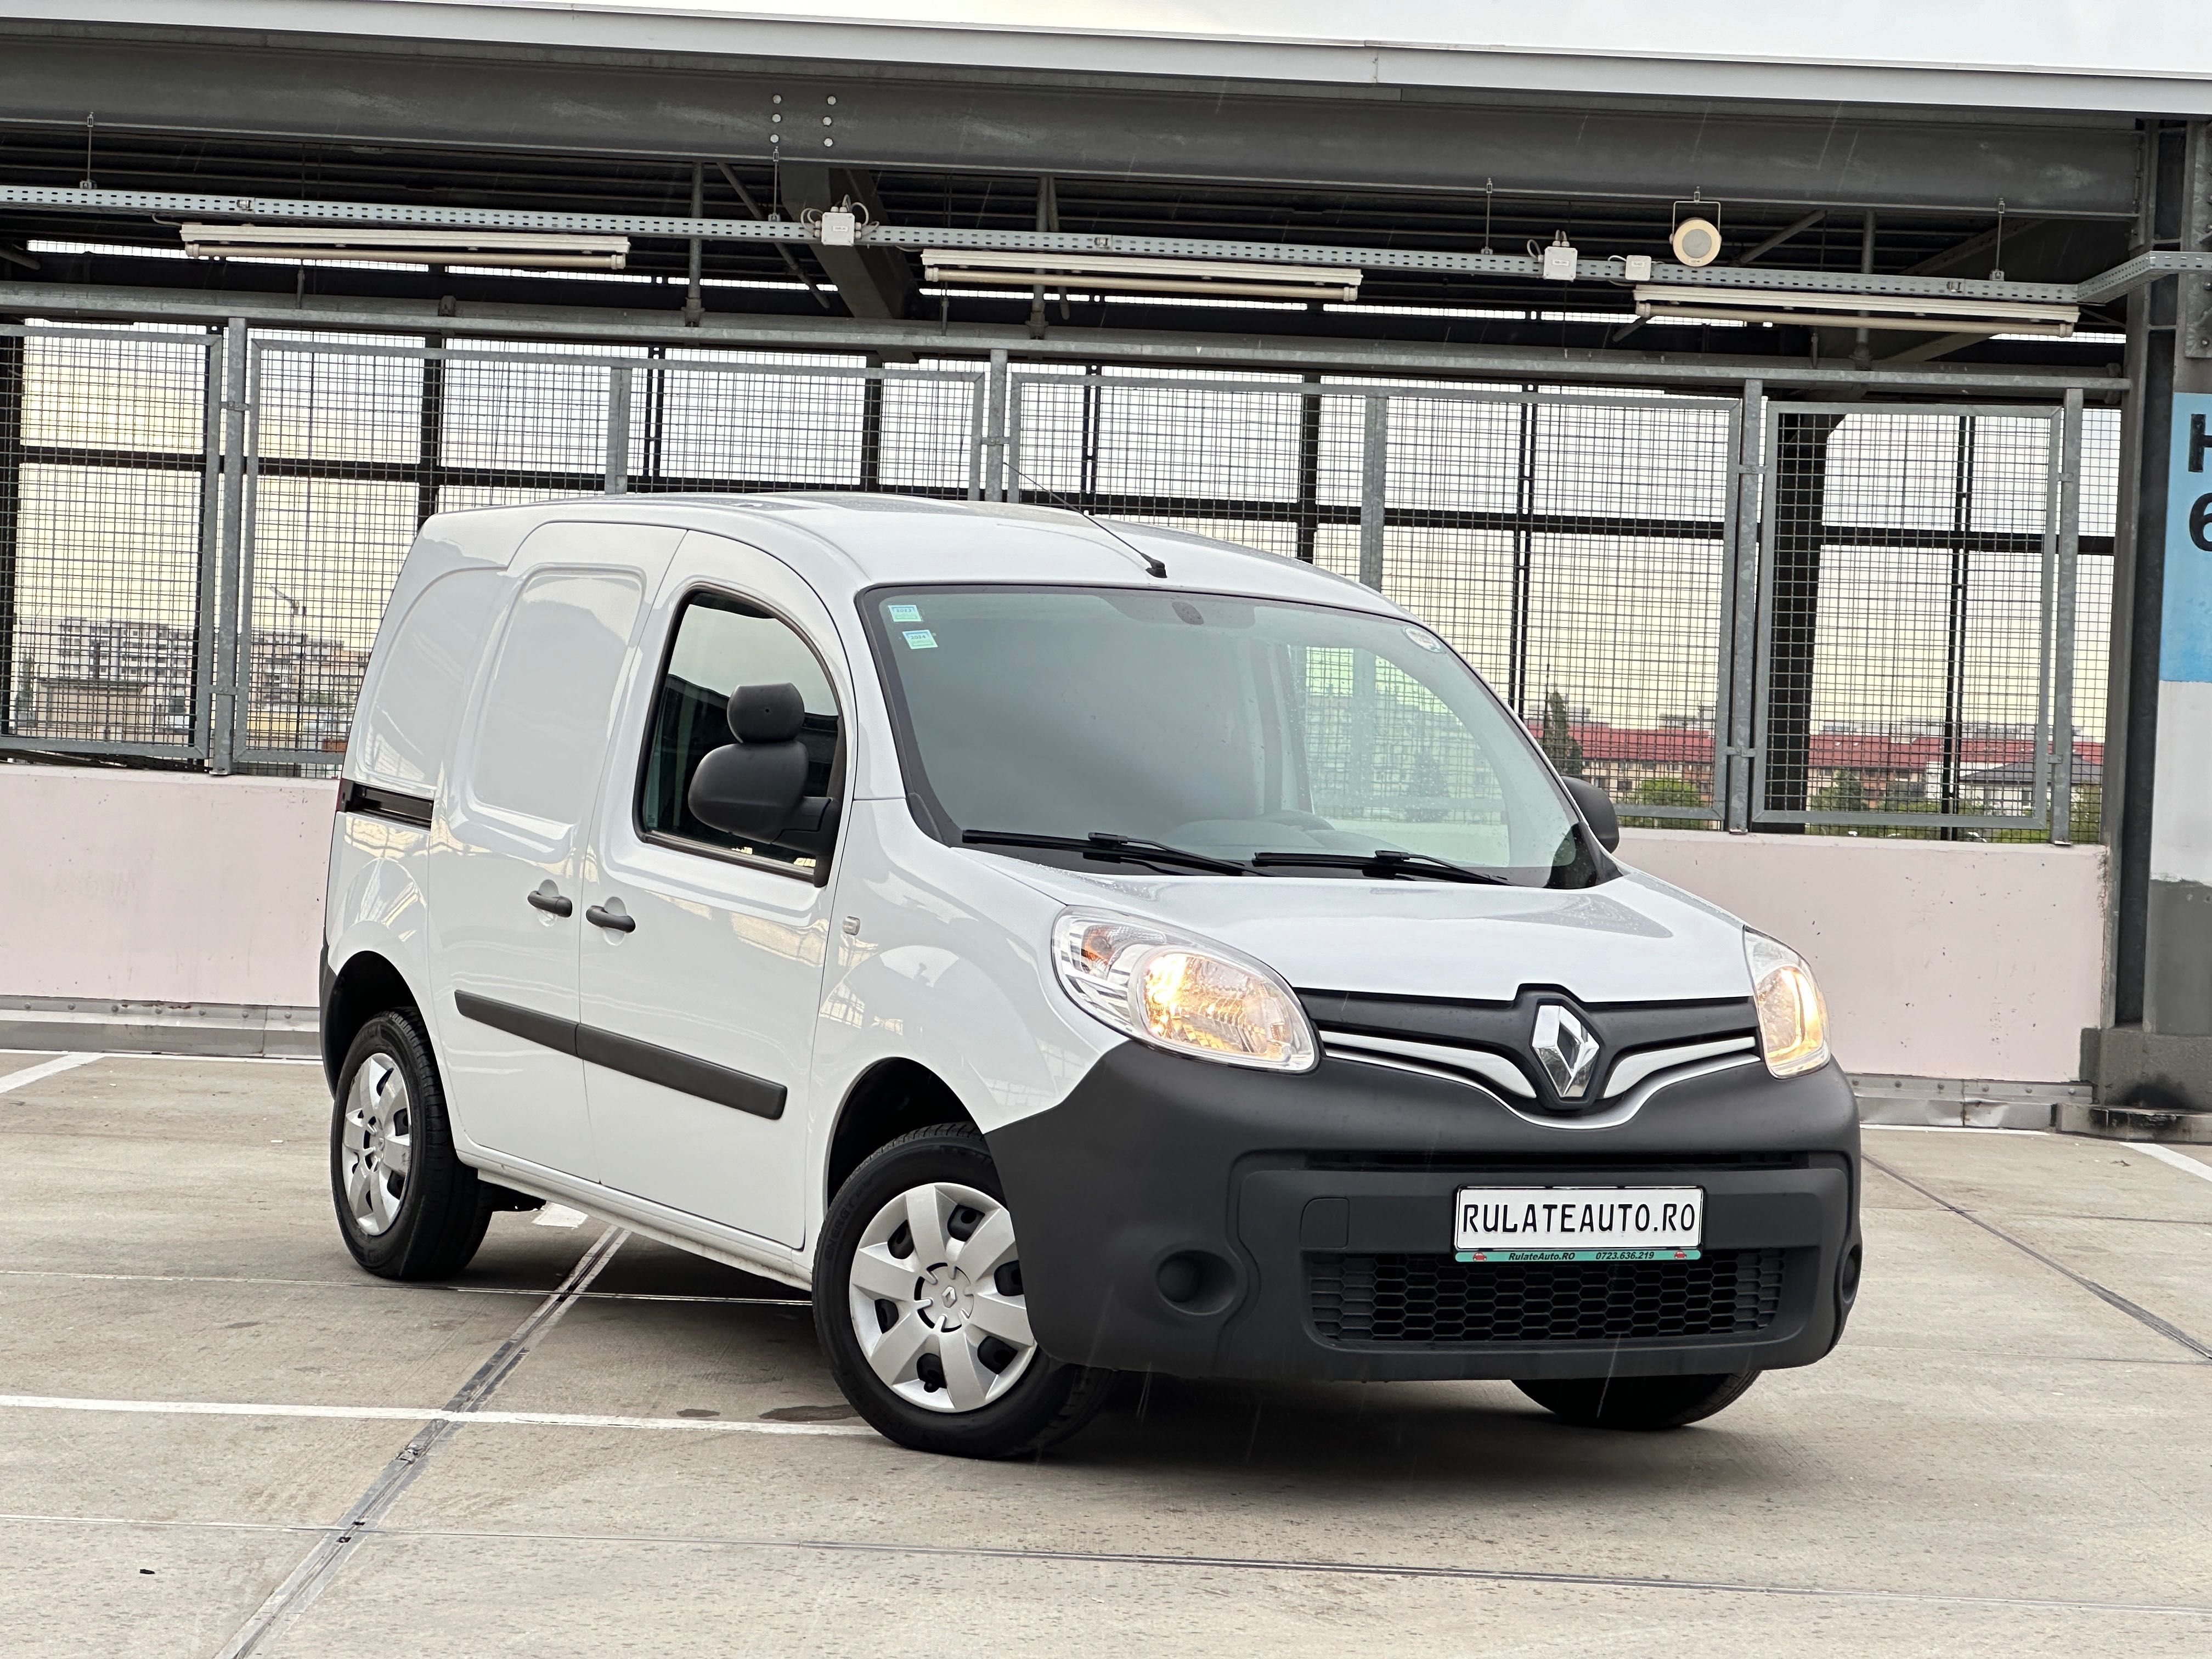 Renault KANGOO 2019 1.5 DCI - 75 CP 3 LOCURI  Ac/Senzori/Rate Garantie